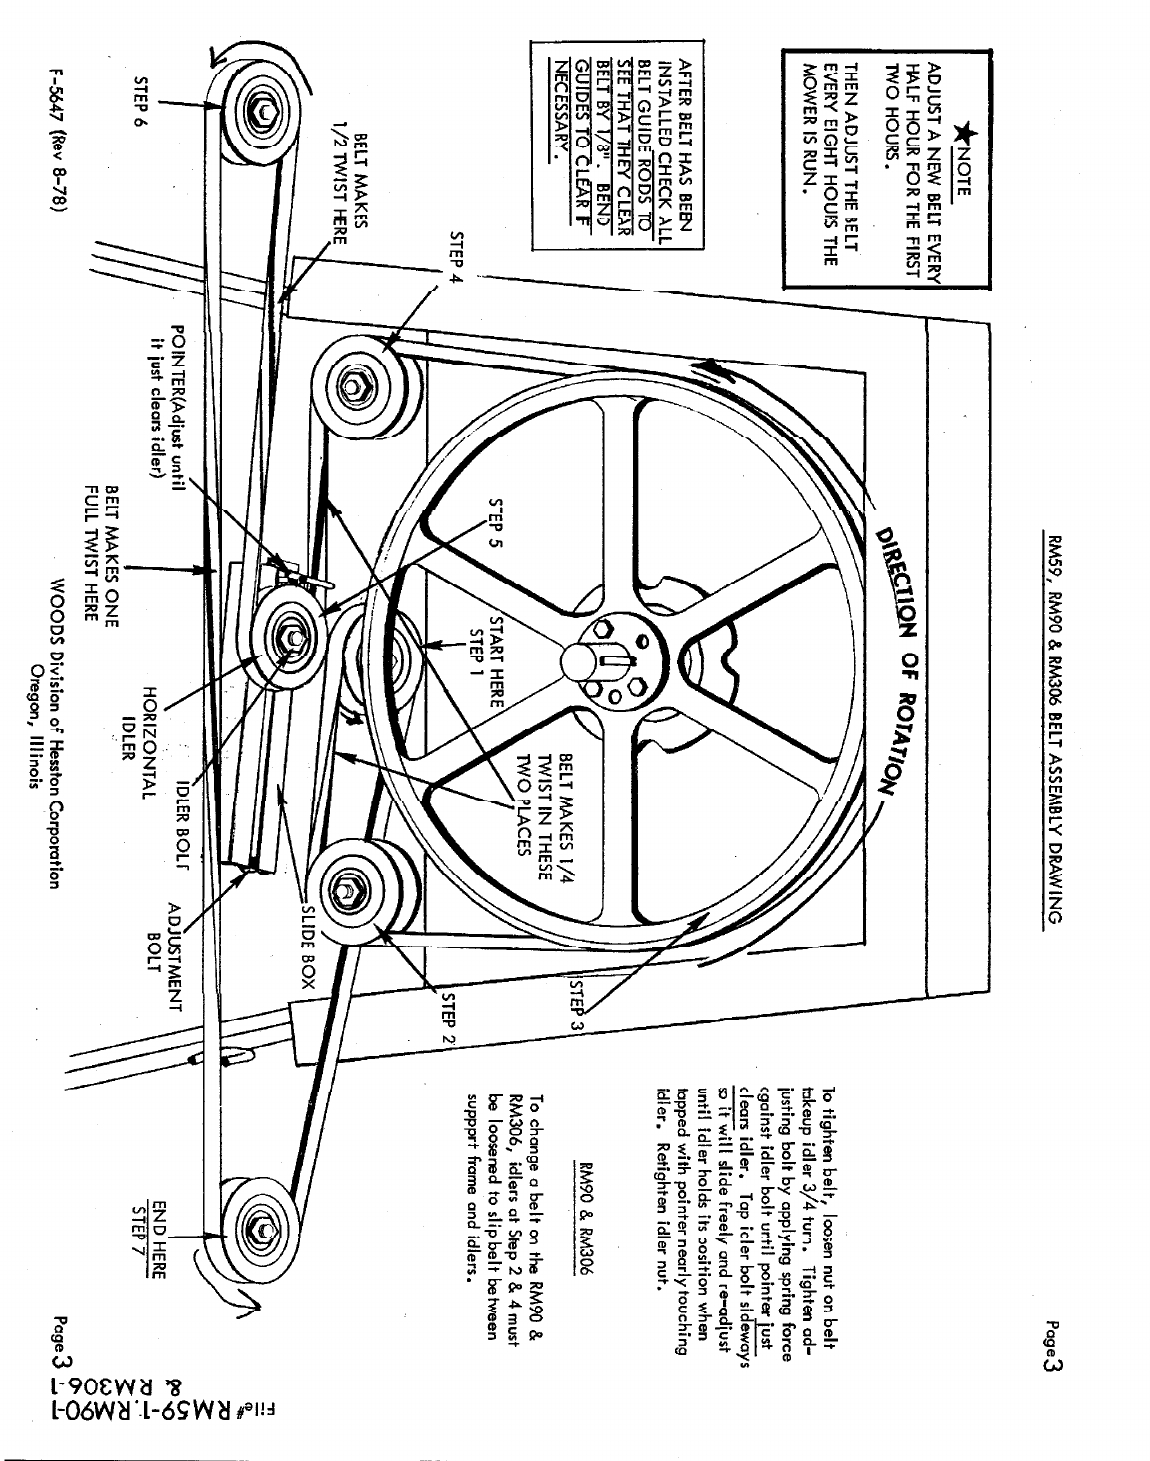 Woods Mower Parts Diagrams exatin.info